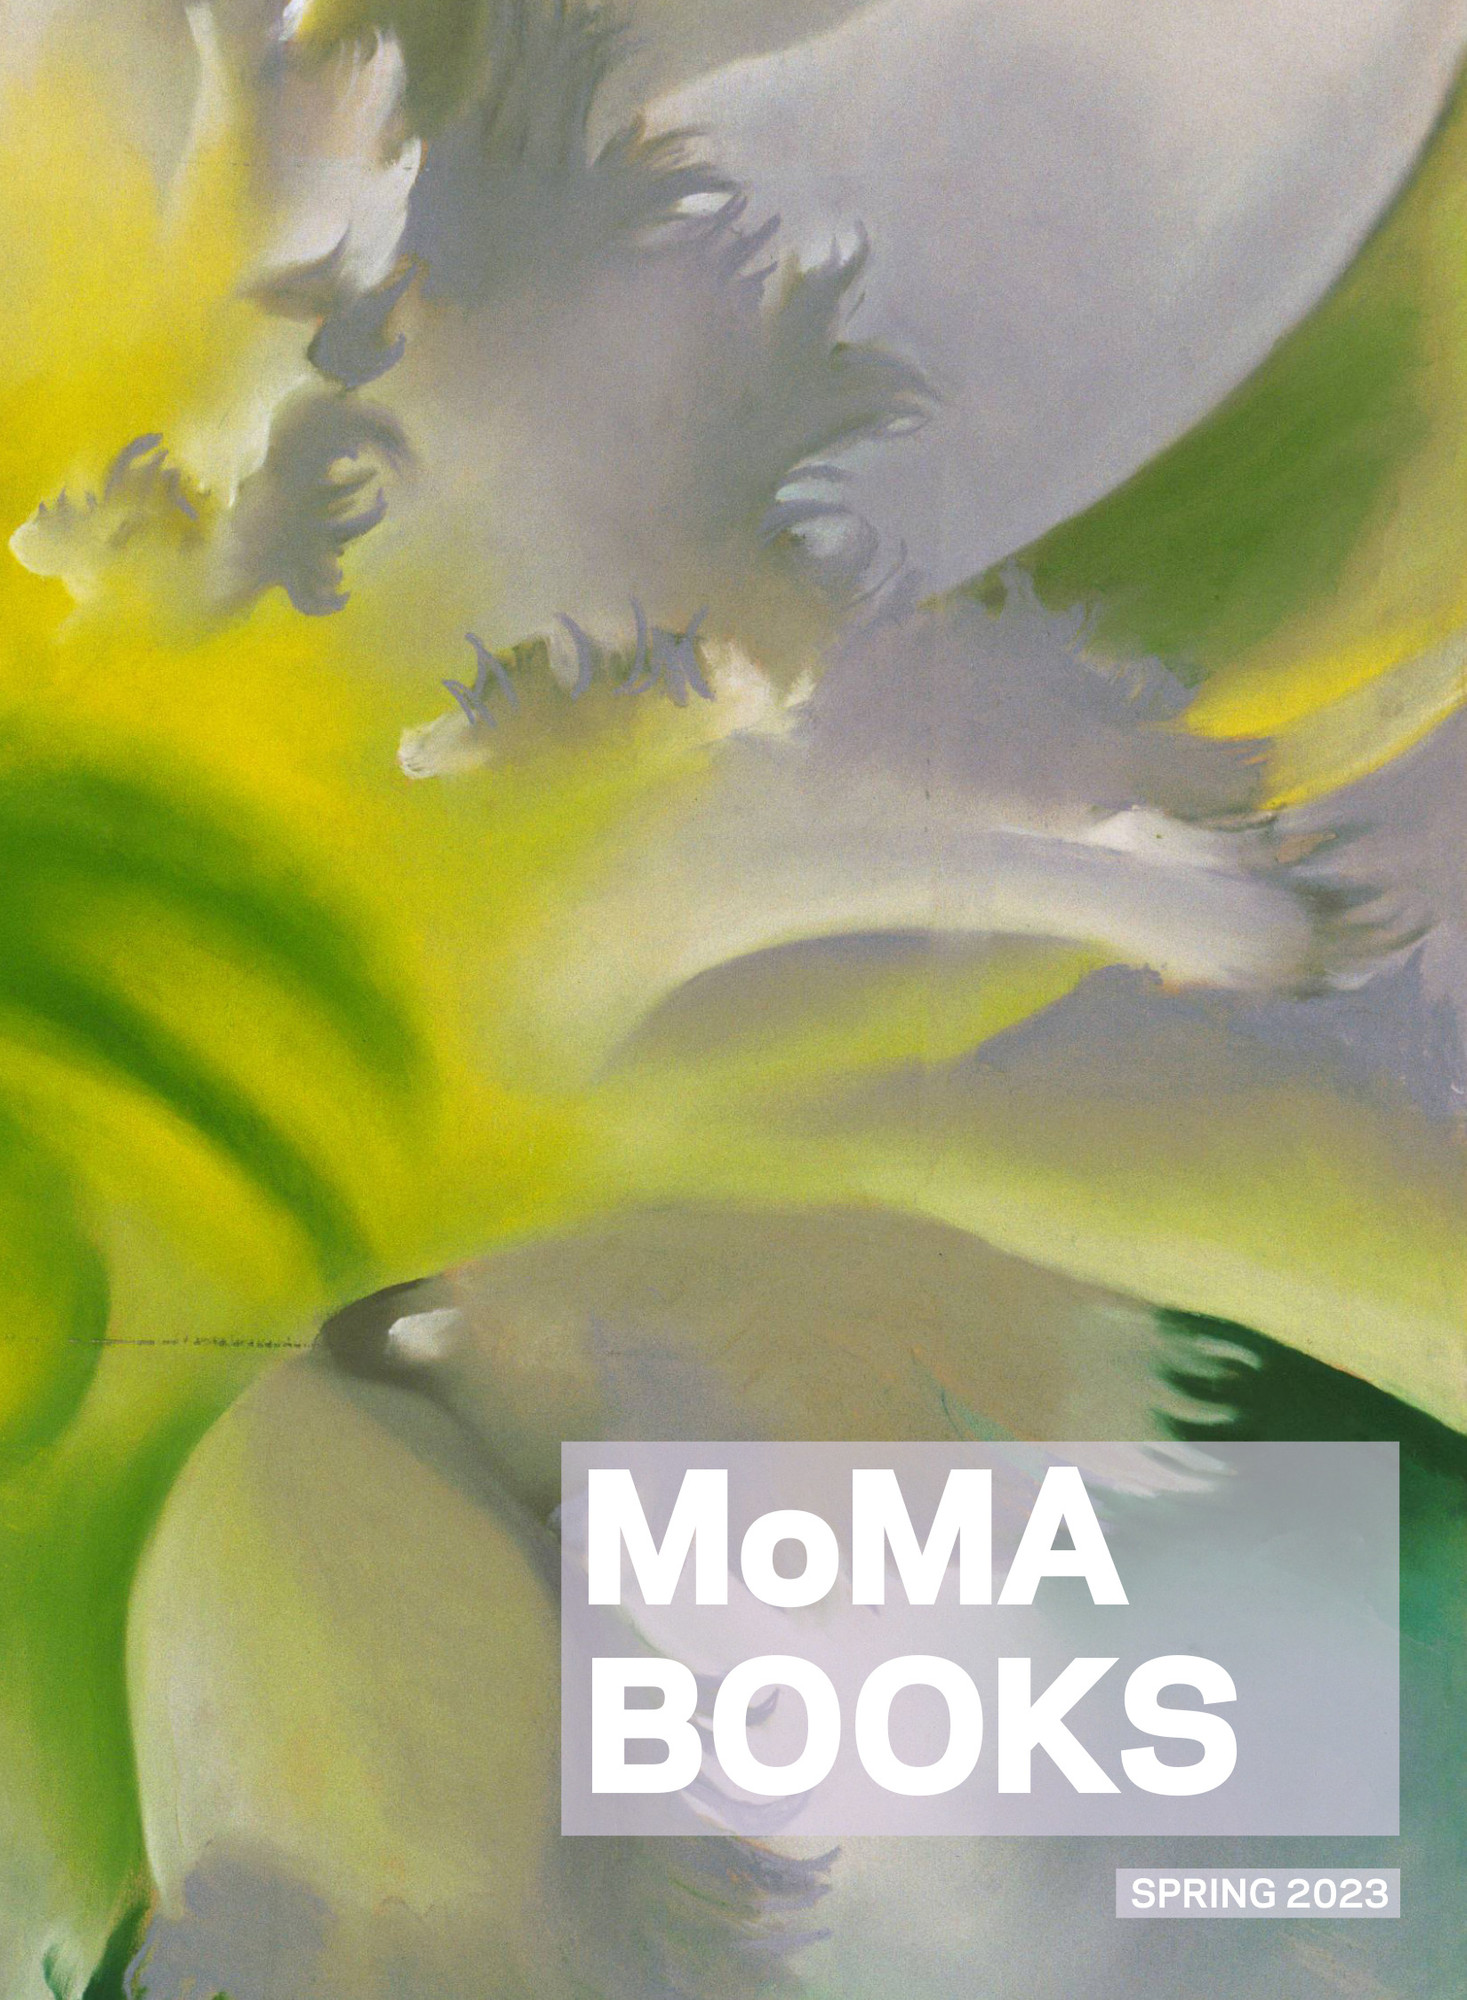 MoMA BOOKS Spring 2023